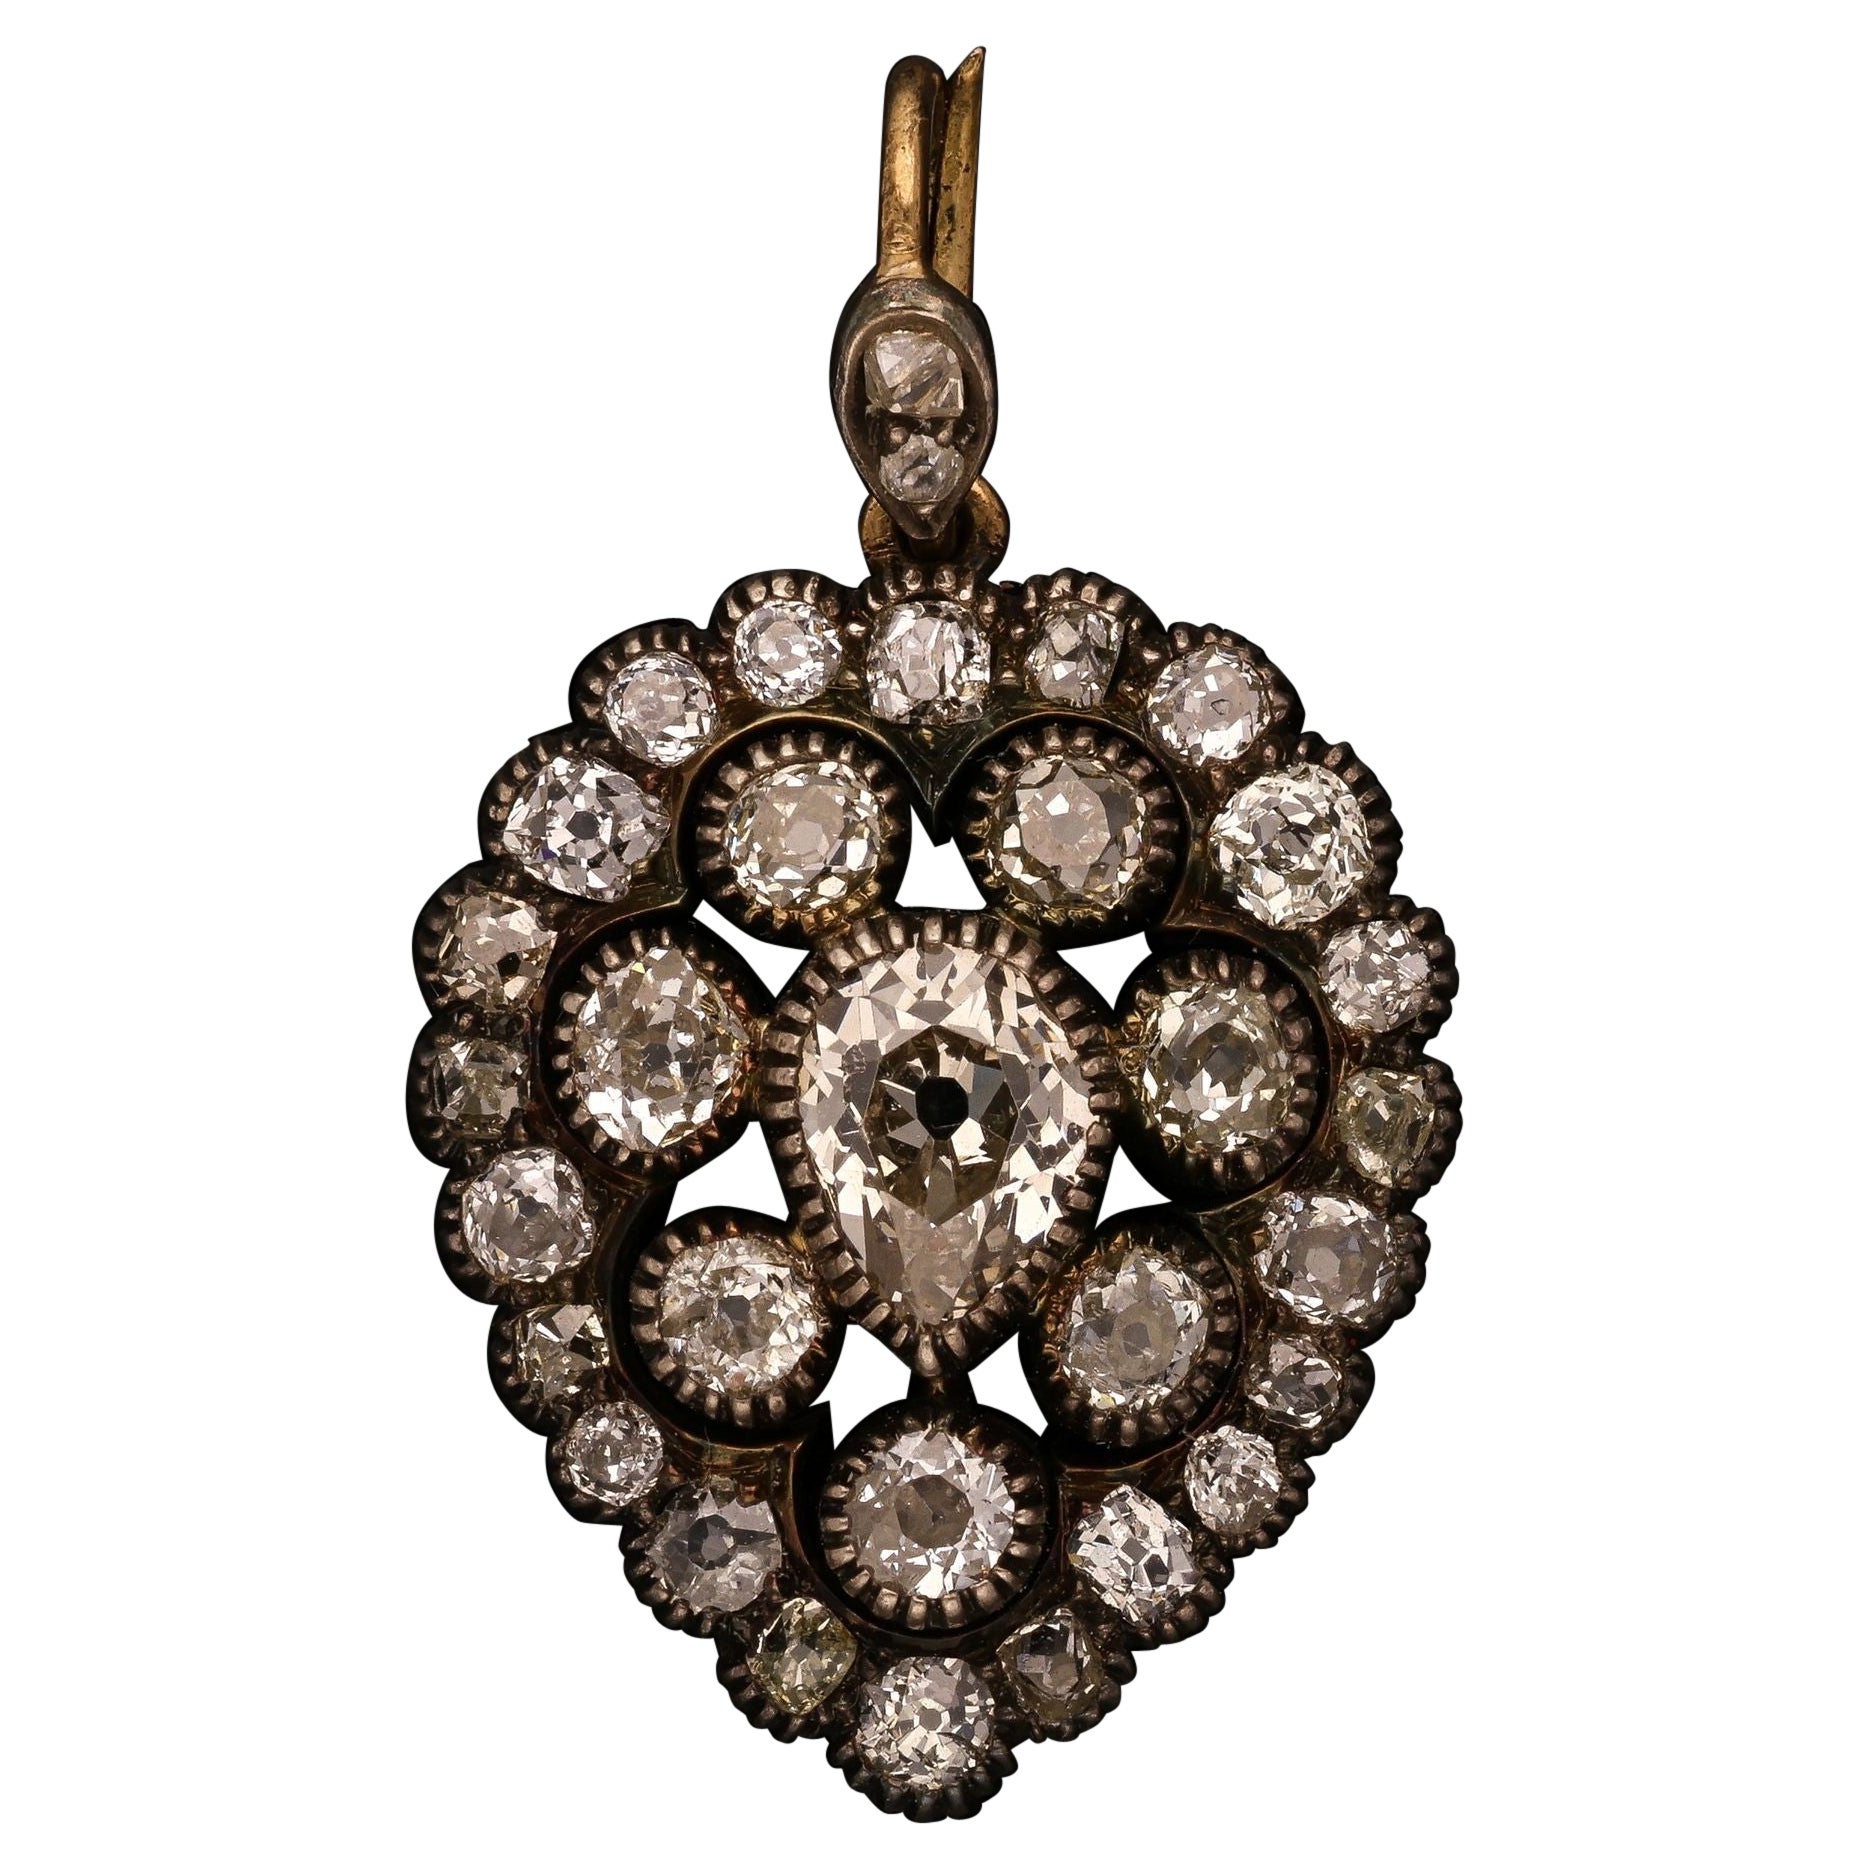 Pendentif victorien en forme de cœur avec diamants, circa 1870